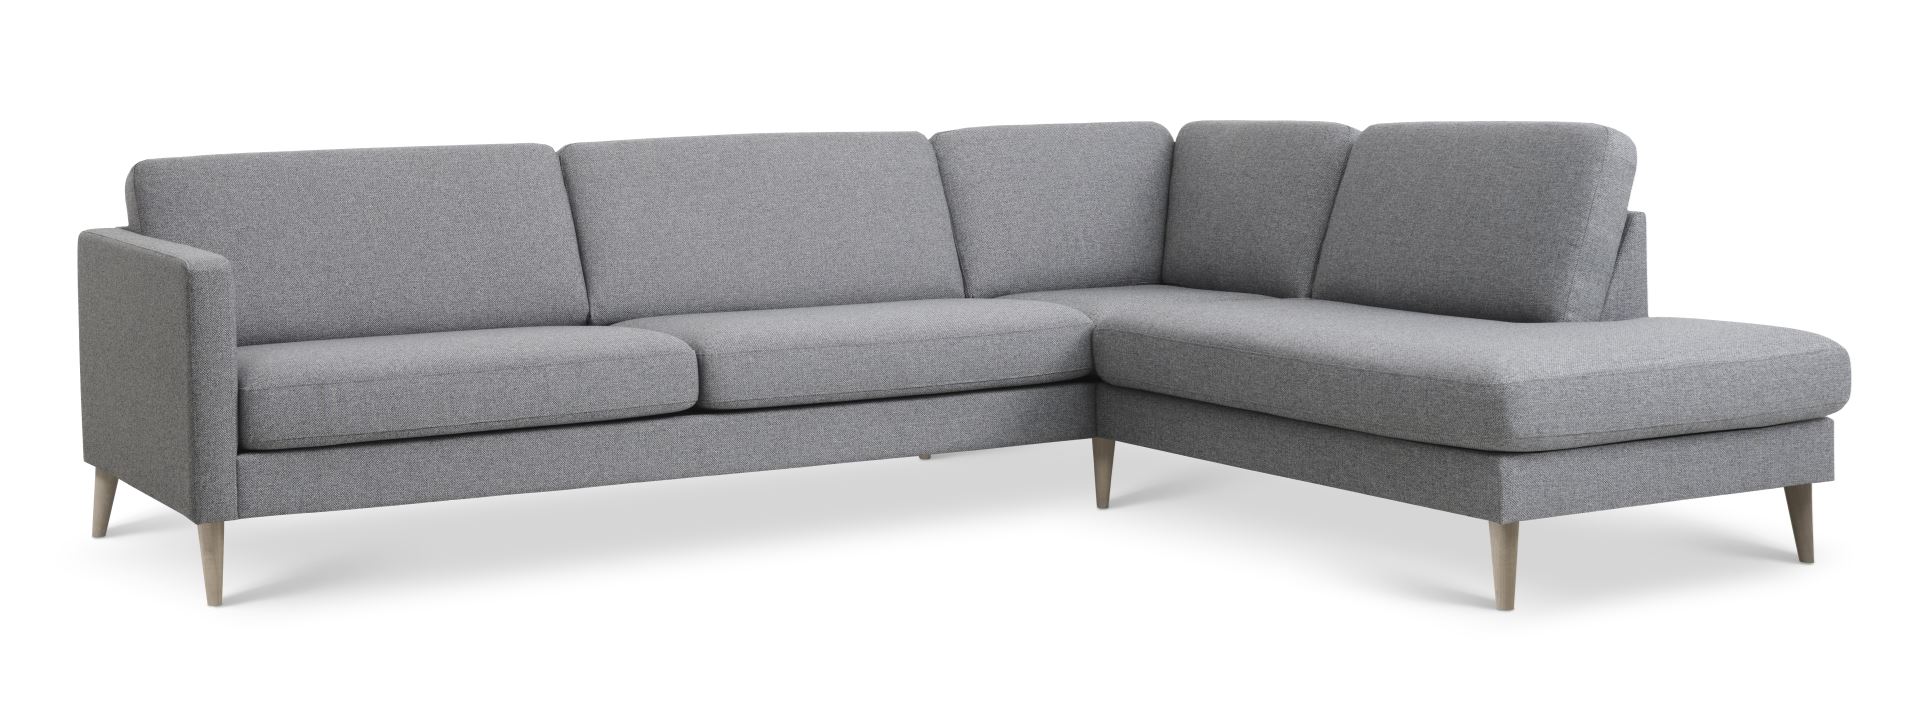 Ask sæt 61 stor OE sofa, m. højre chaiselong - lys granitgrå polyester stof og natur træ